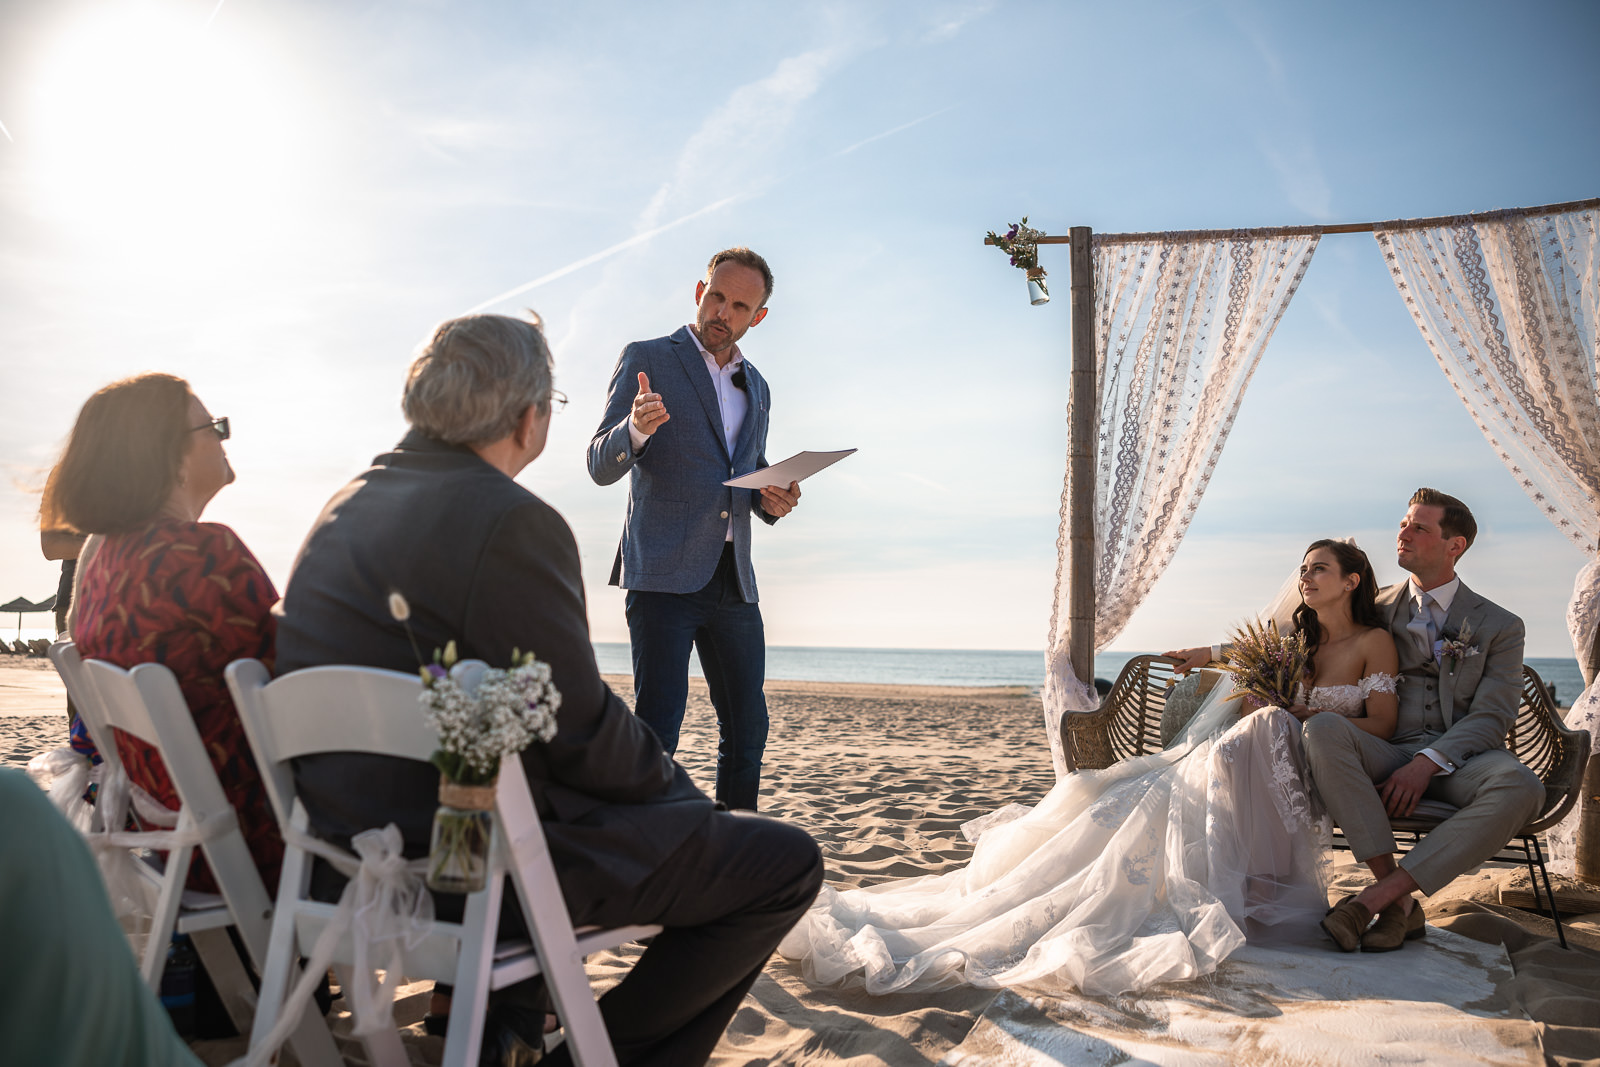 Ceremony speaker Mark van Leeuwen at Intimate Beach Wedding Photographer